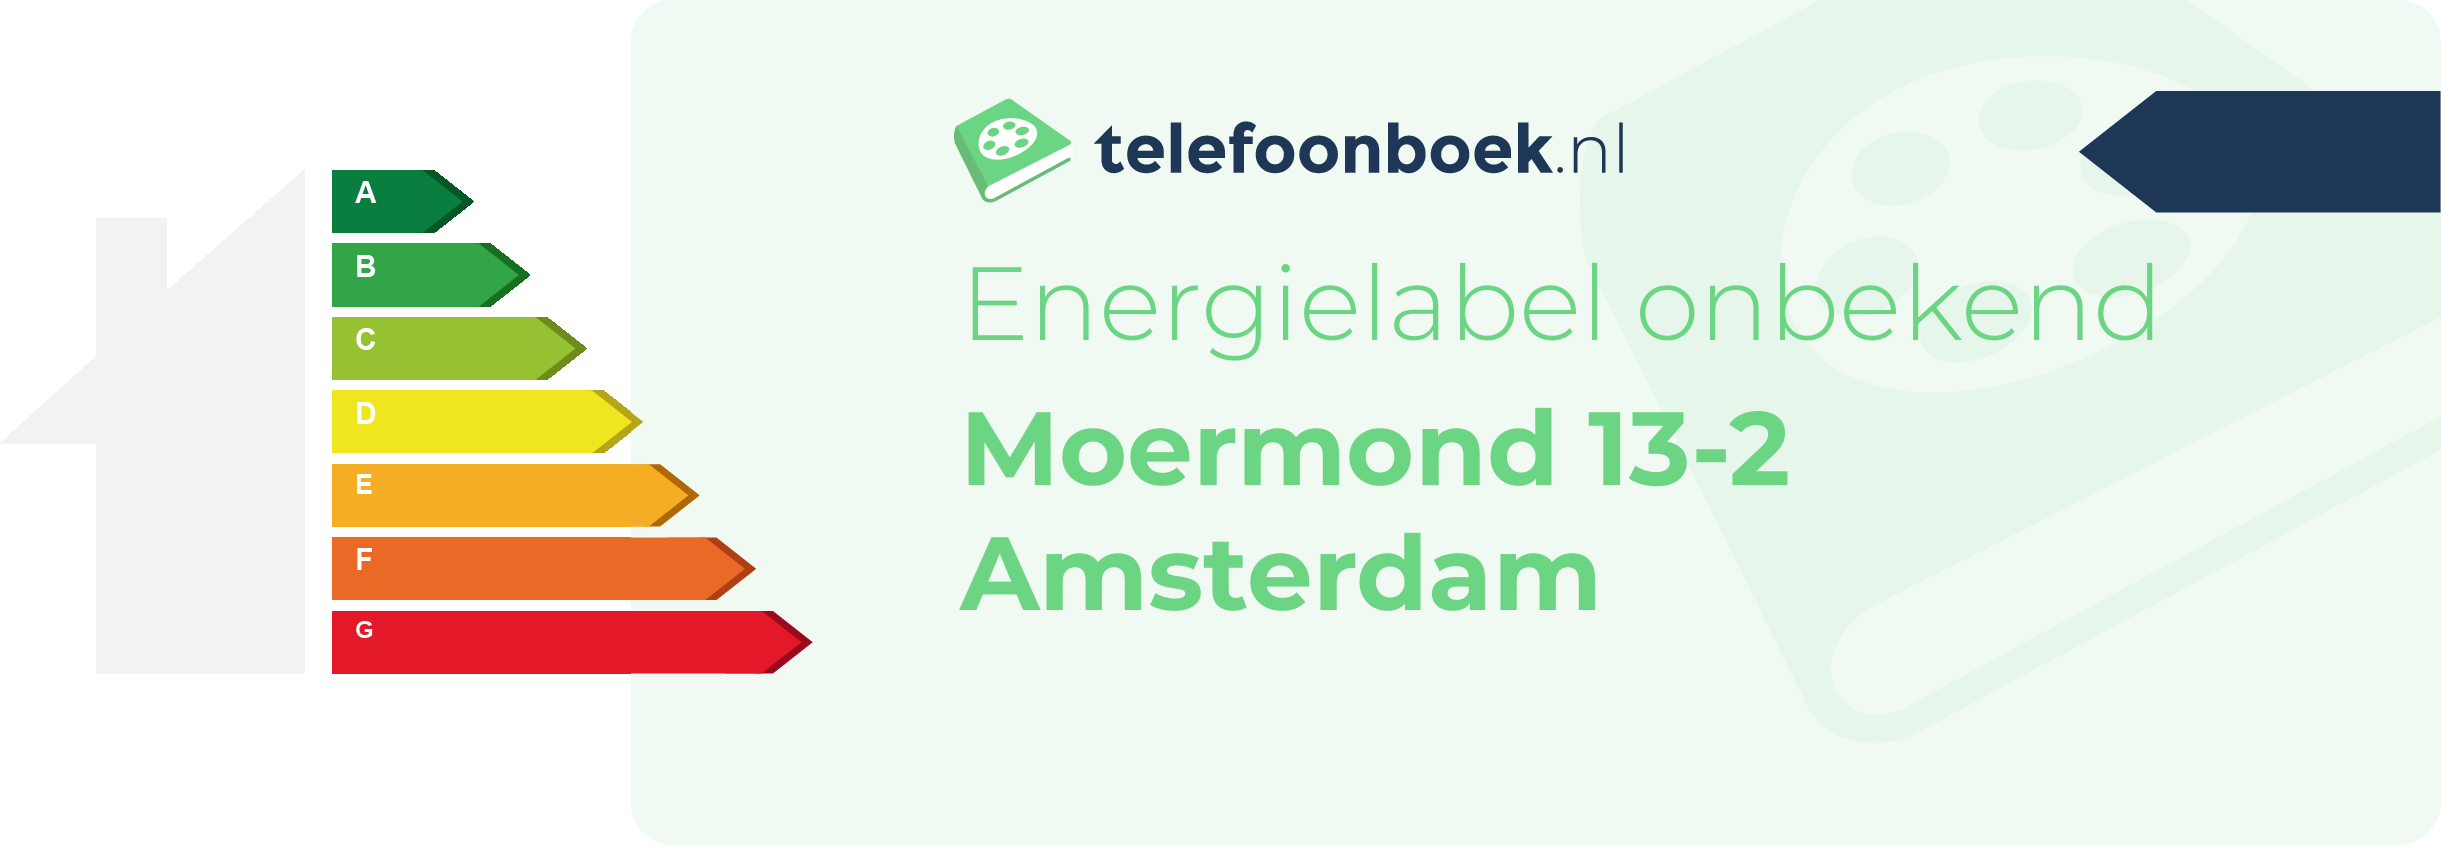 Energielabel Moermond 13-2 Amsterdam